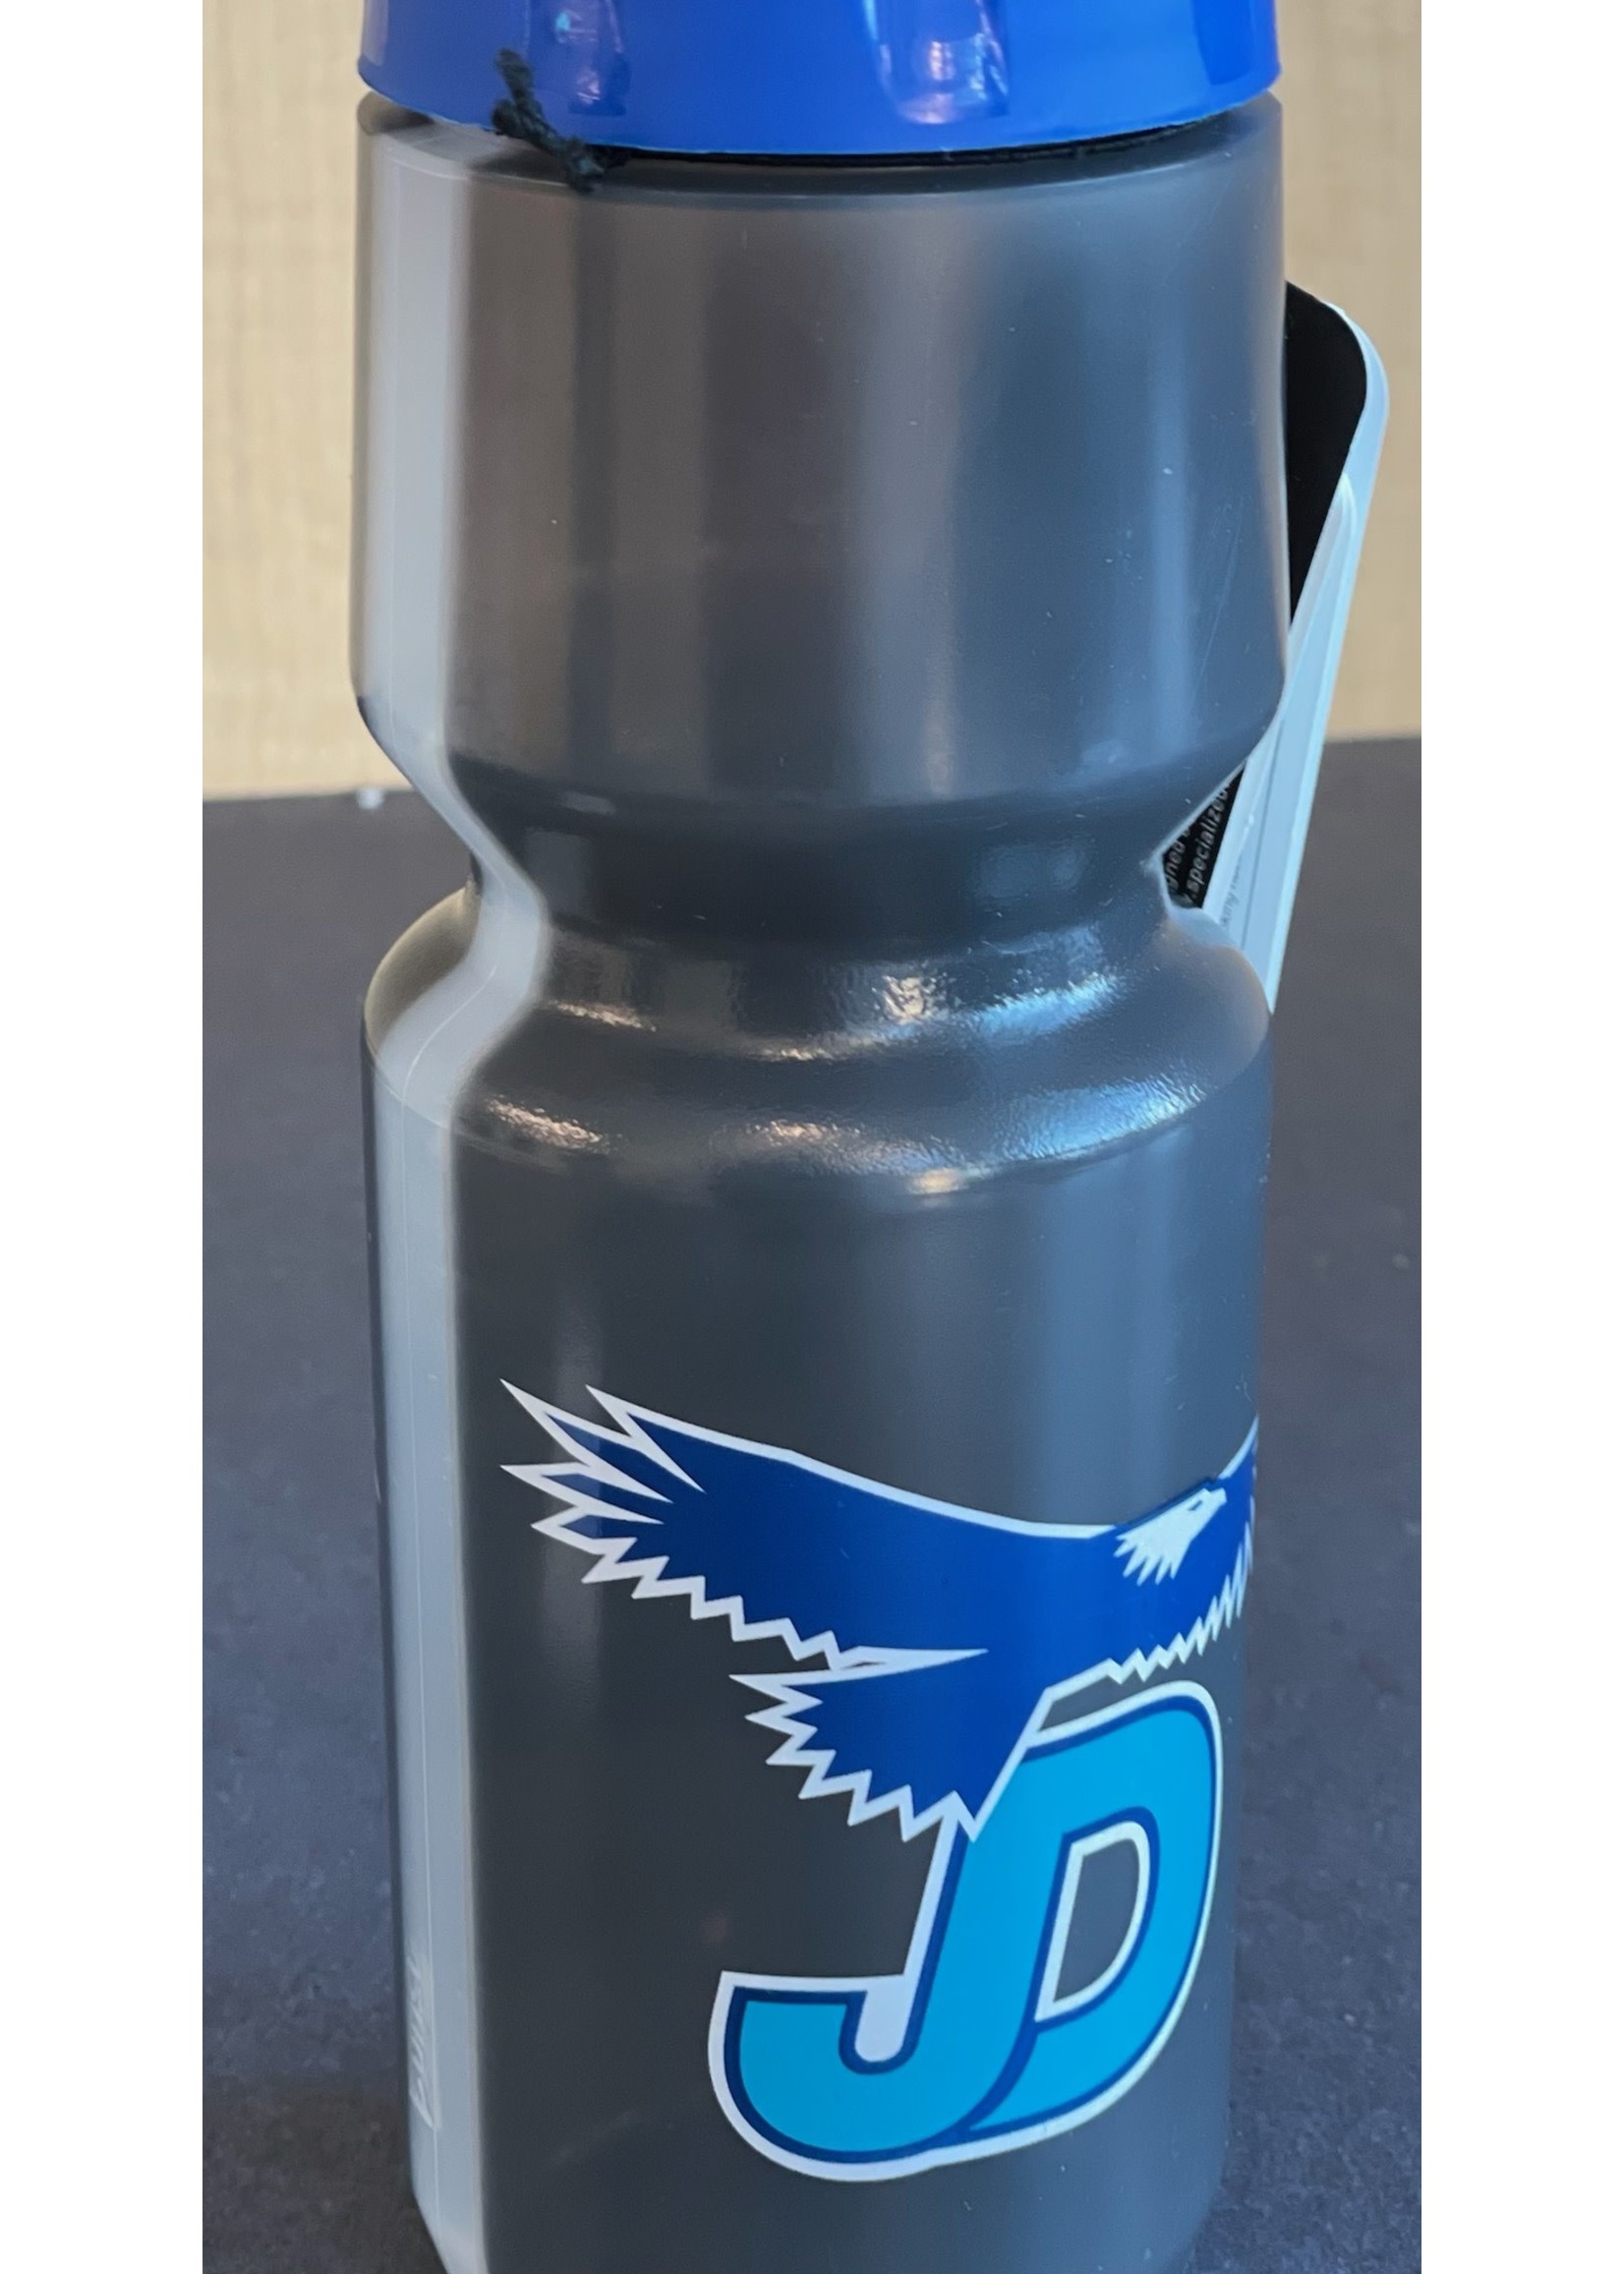 NON-UNIFORM Beverage - JD Water bottle, gray with blue cap